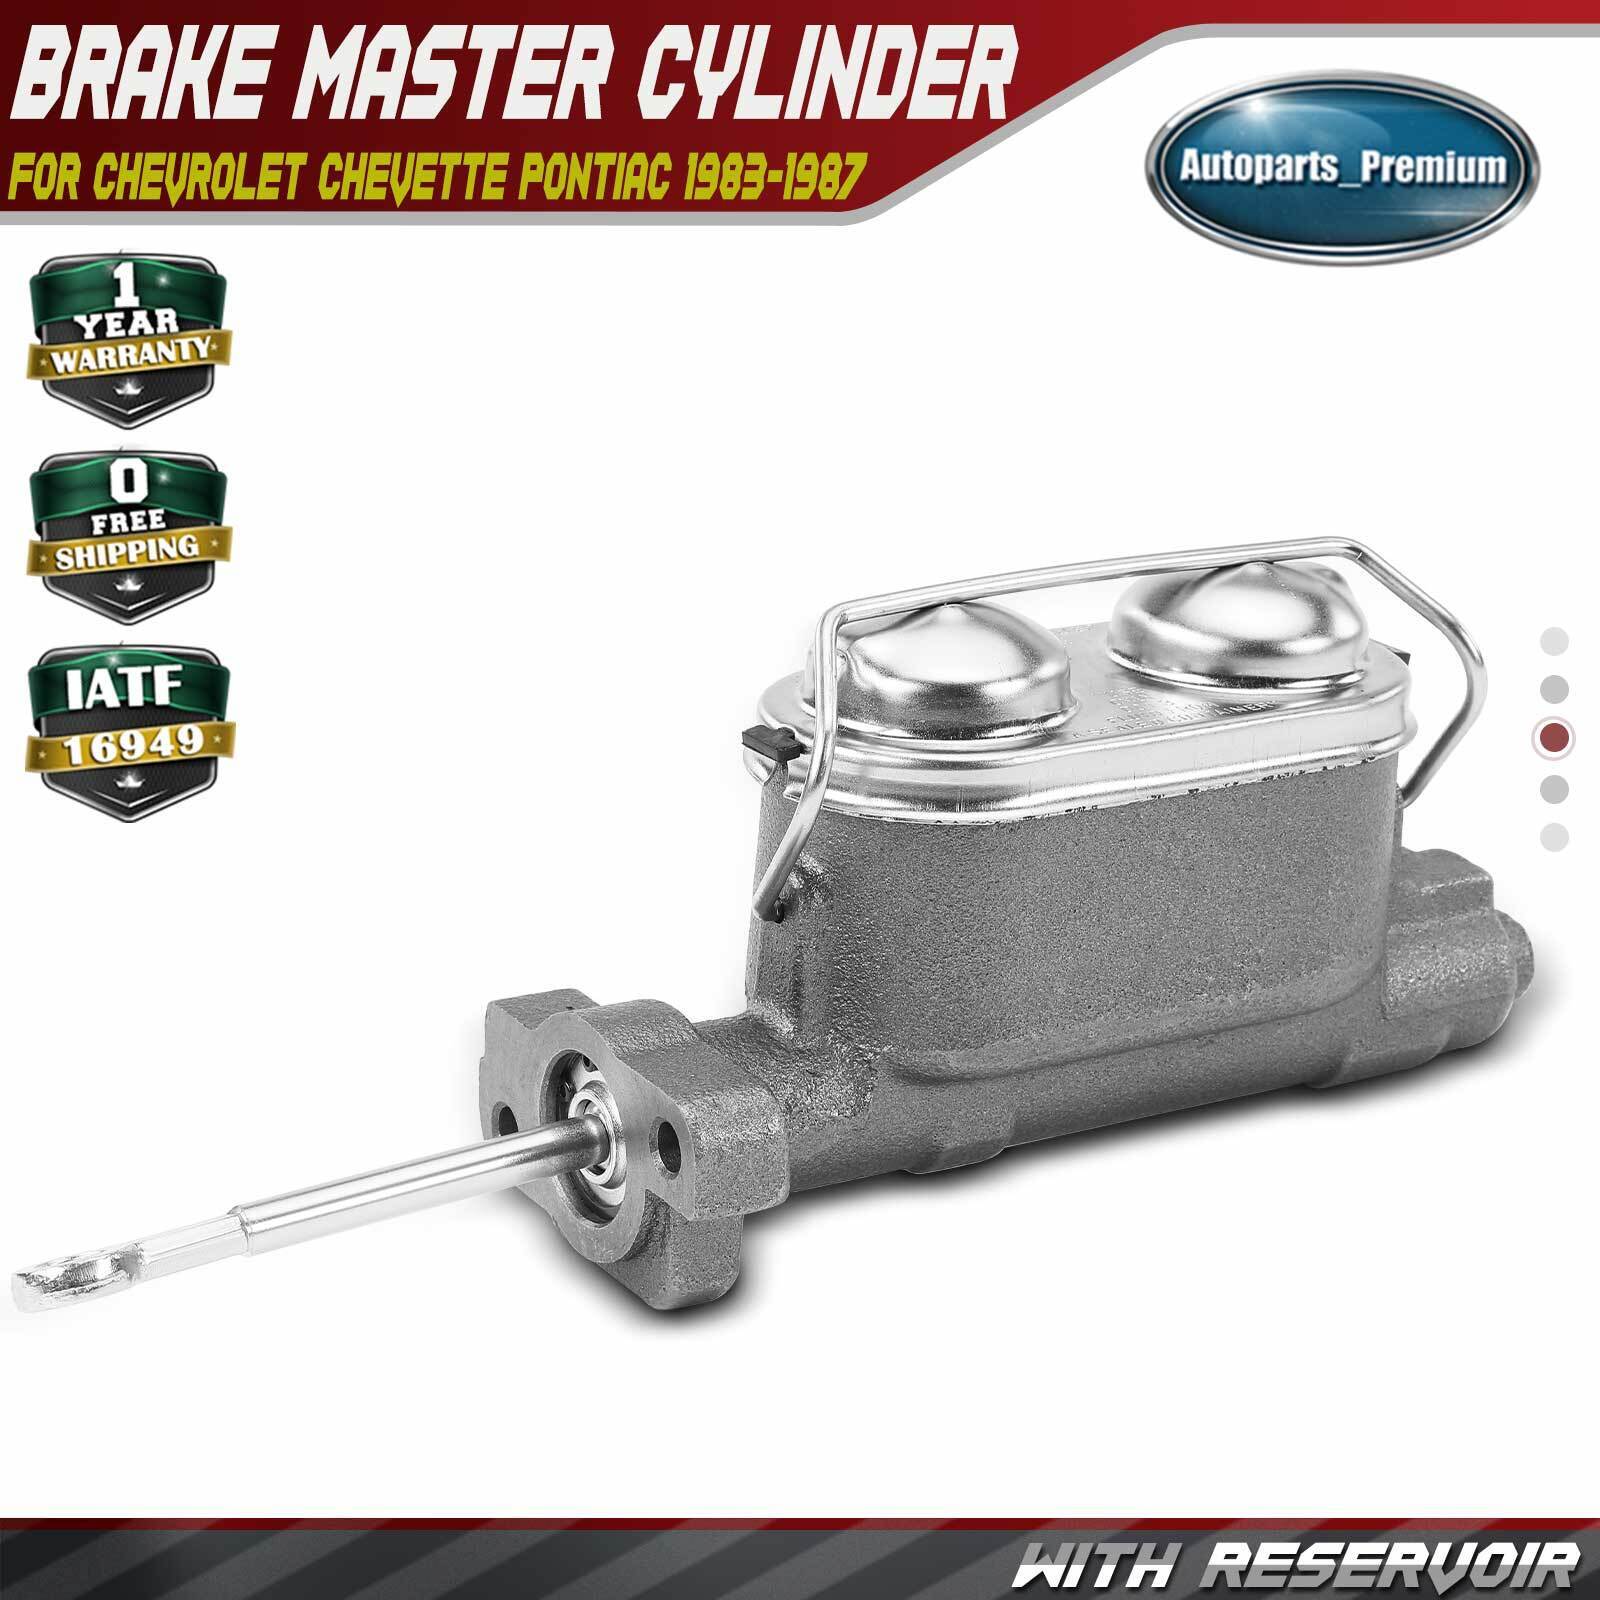 Brake Master Cylinder with Reservoir for Chevrolet Chevette Pontiac 1983-1987